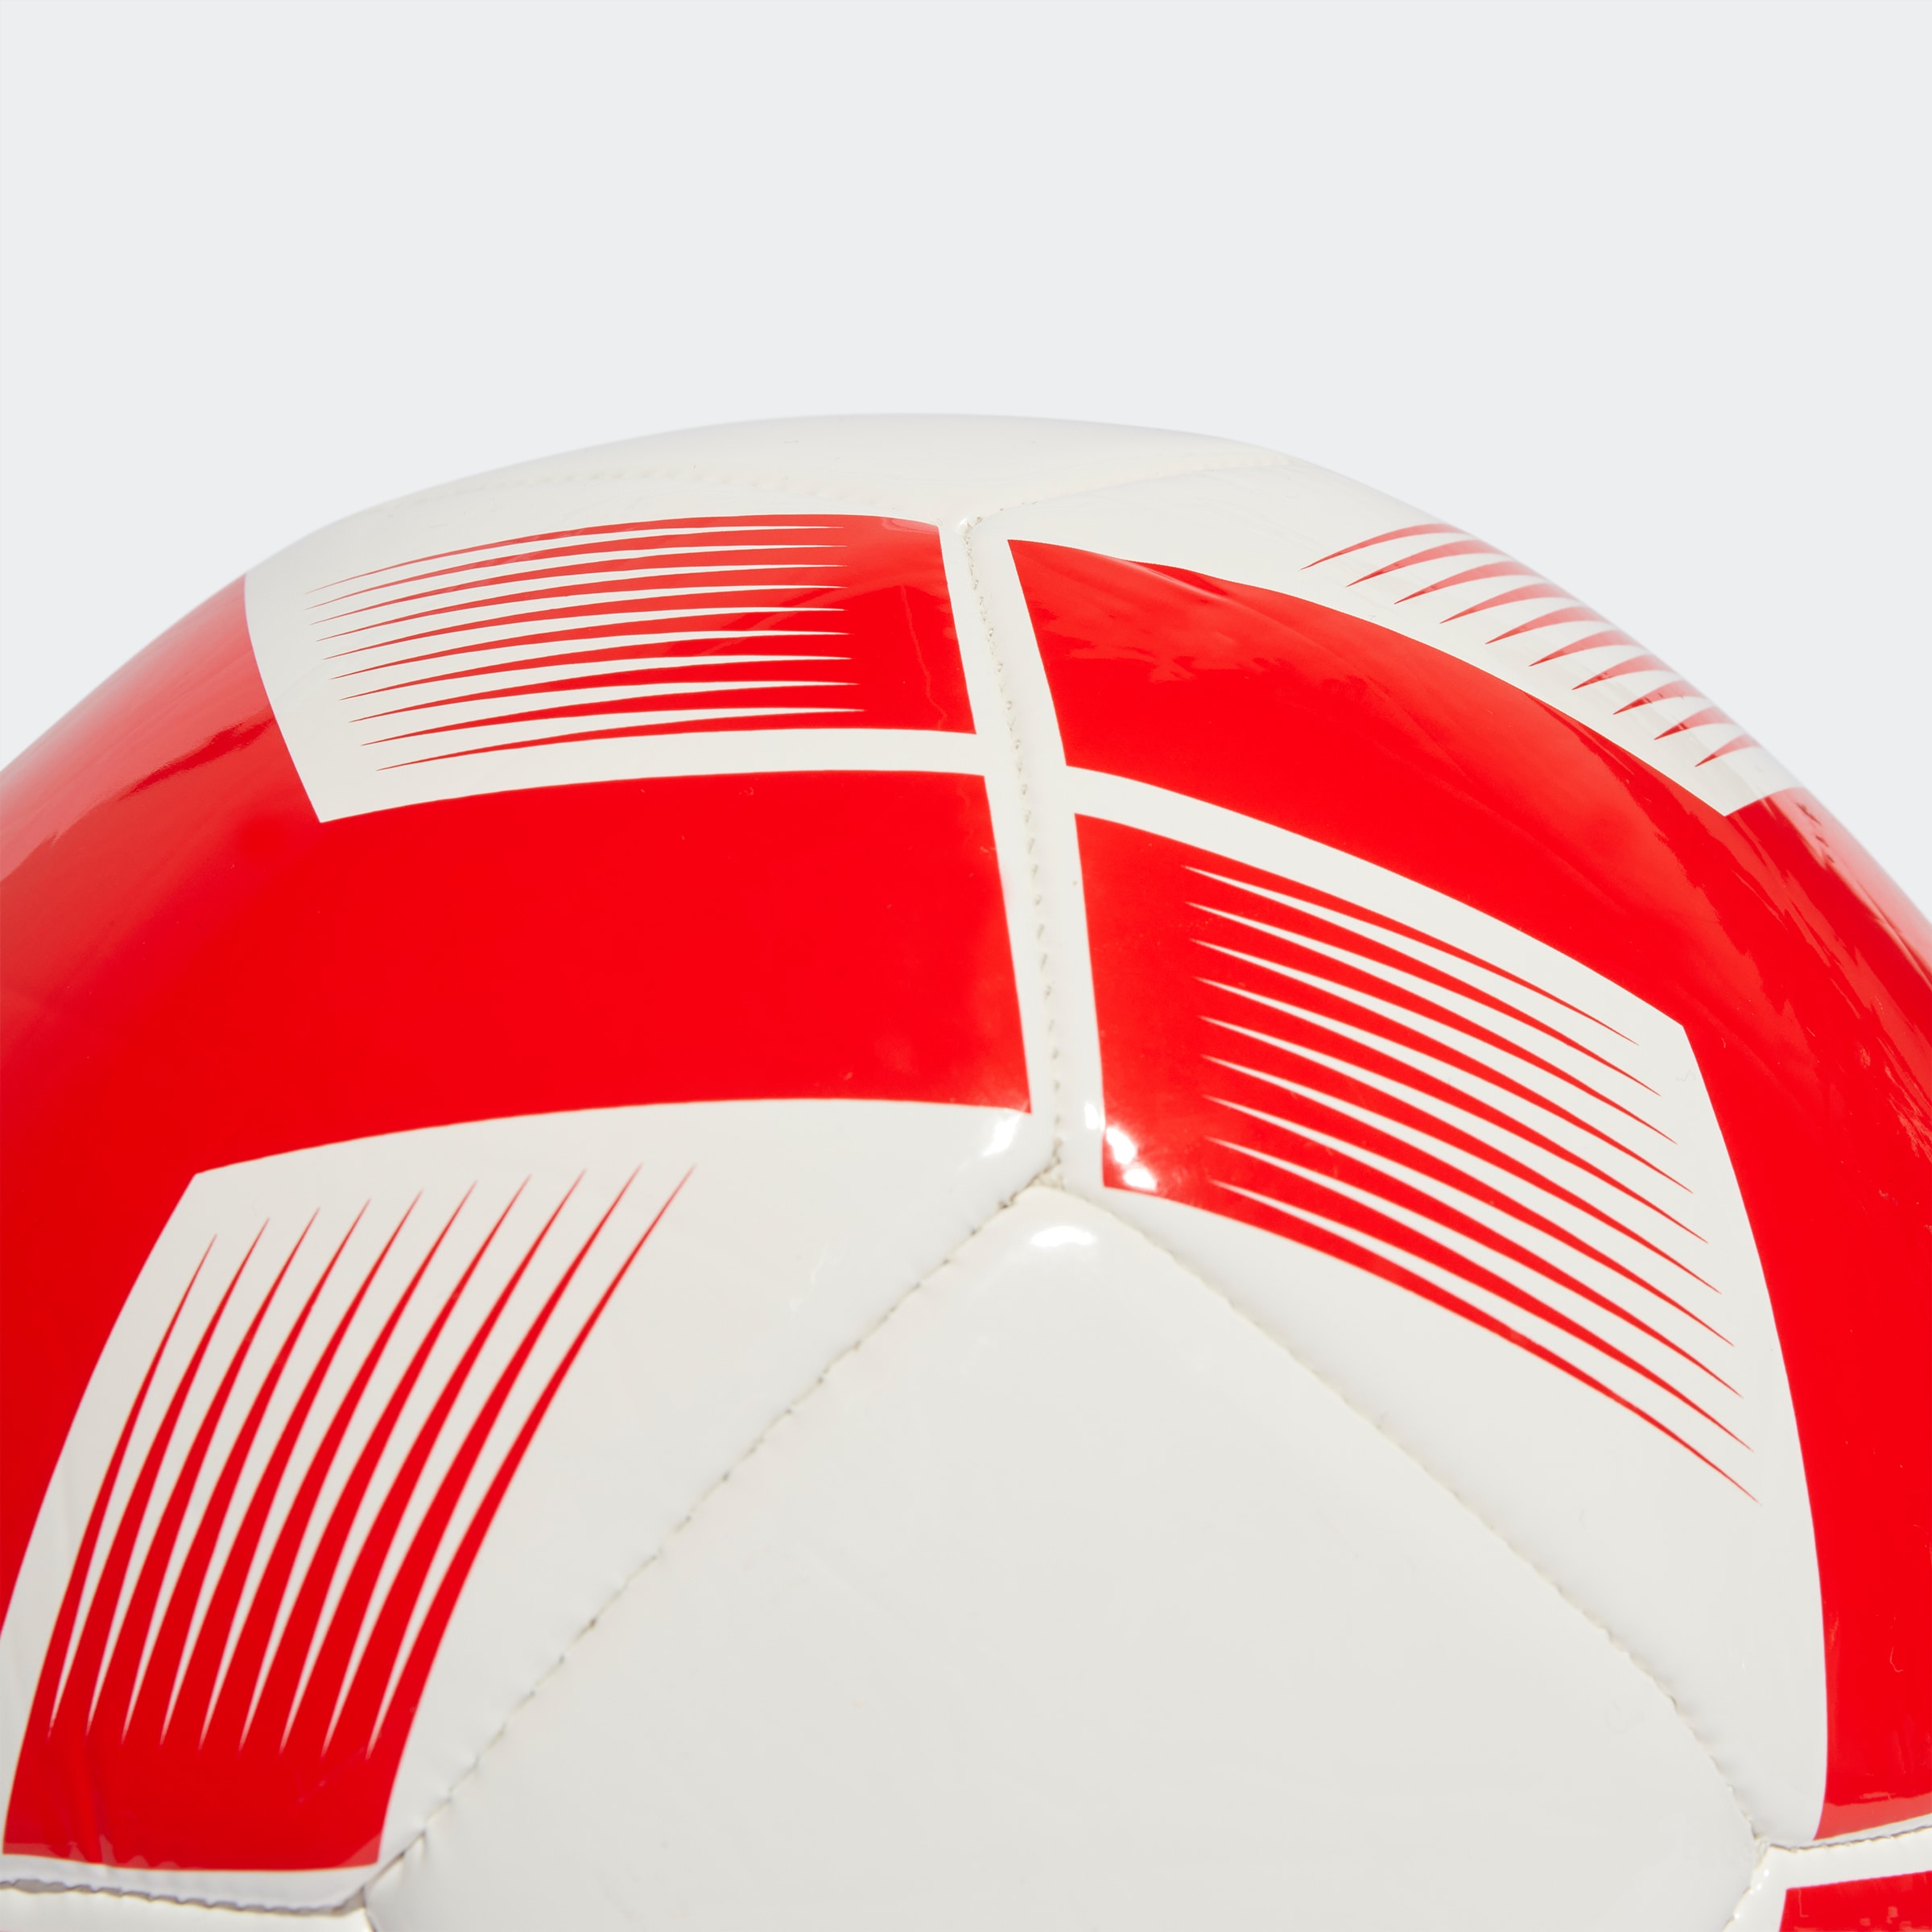 adidas Performance Fußball »STARLANCER CLUB BALL«, (1)